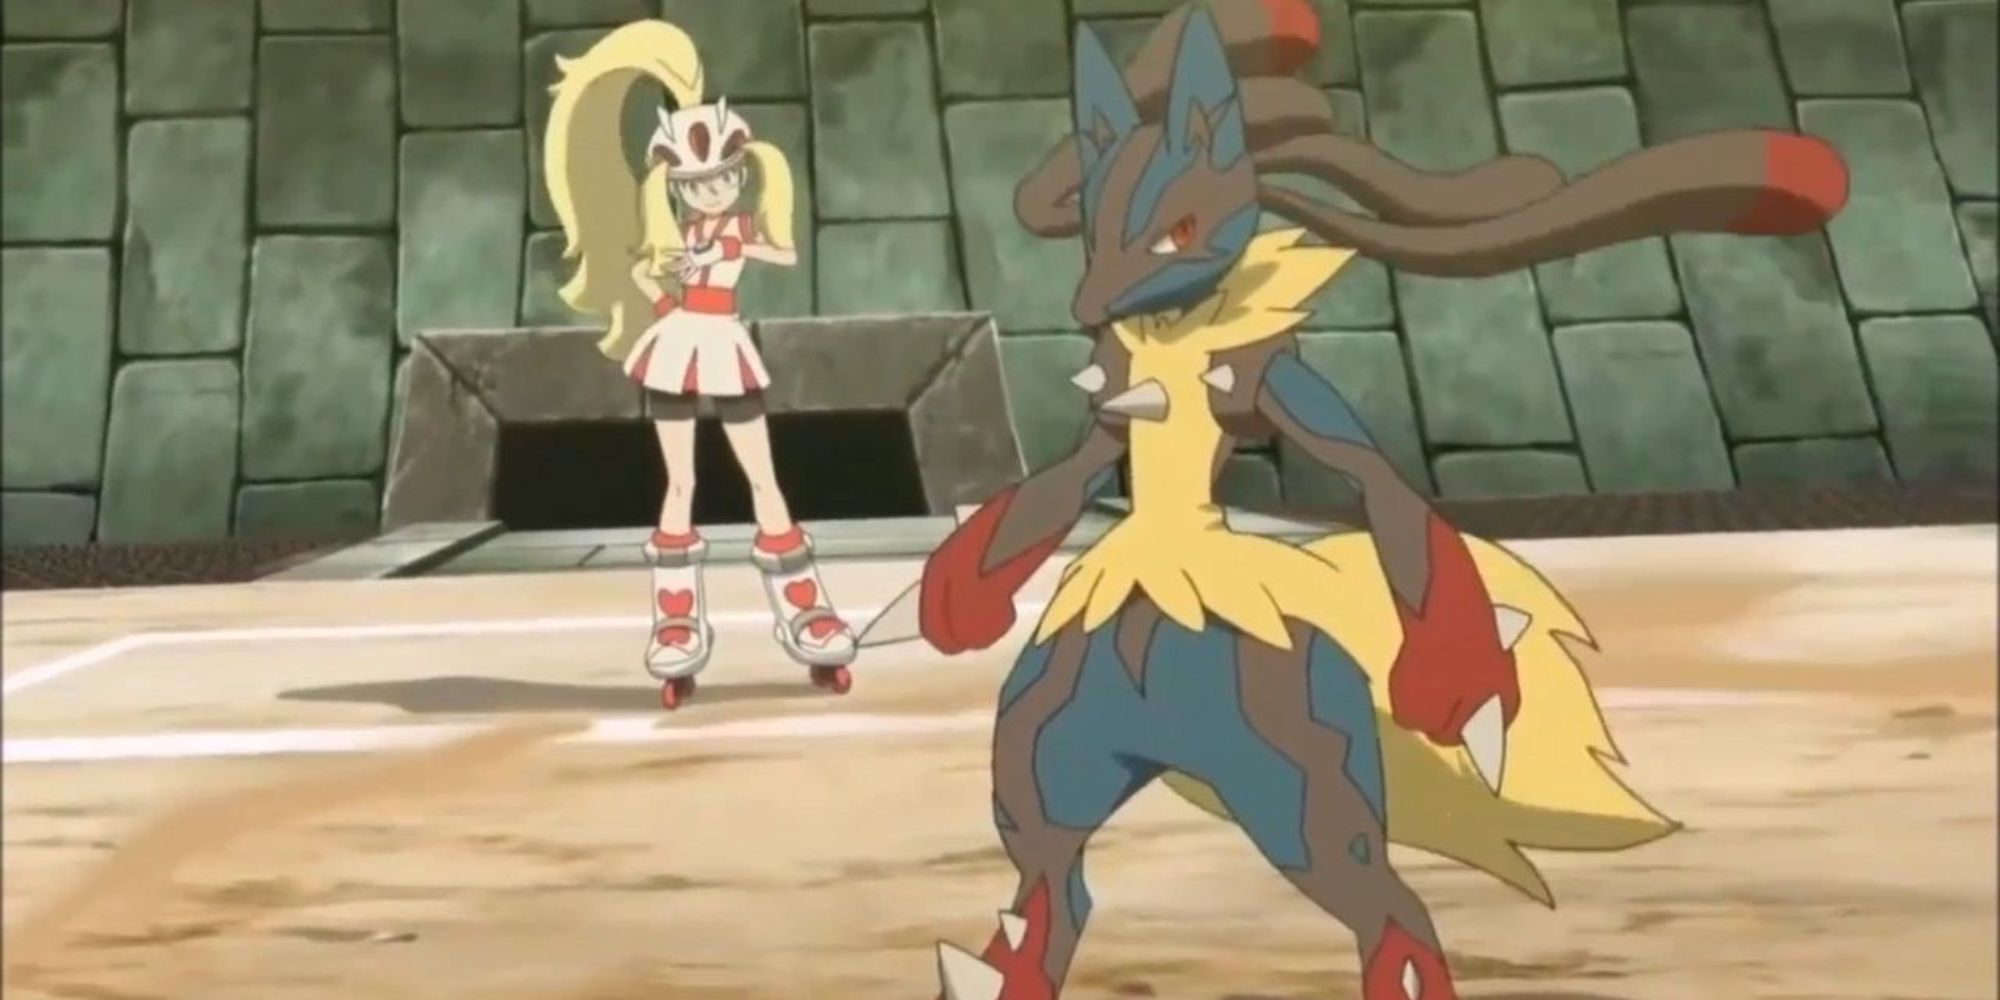 Mega Lucario prepares to battle in a stadium in the Pokemon anime.